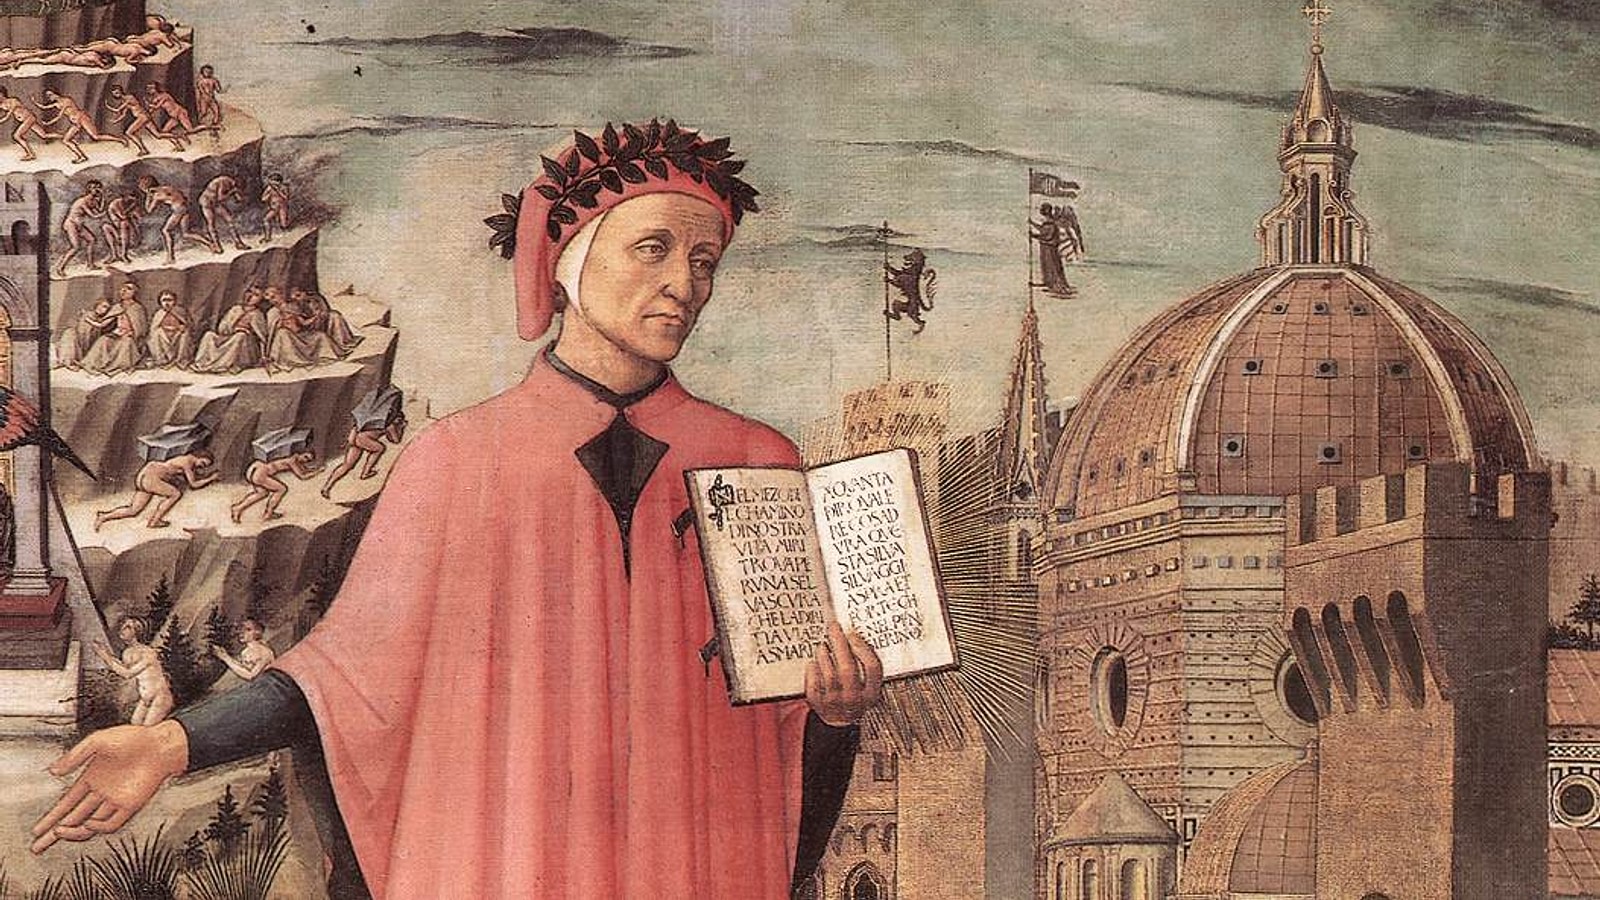 Данте алигьери слушать. Поэт Данте Алигьери. Данте Алигьери фреска. Дуранте дельи Алигьери. Доменико ди Микелино - "Данте и три царства" - 1465.